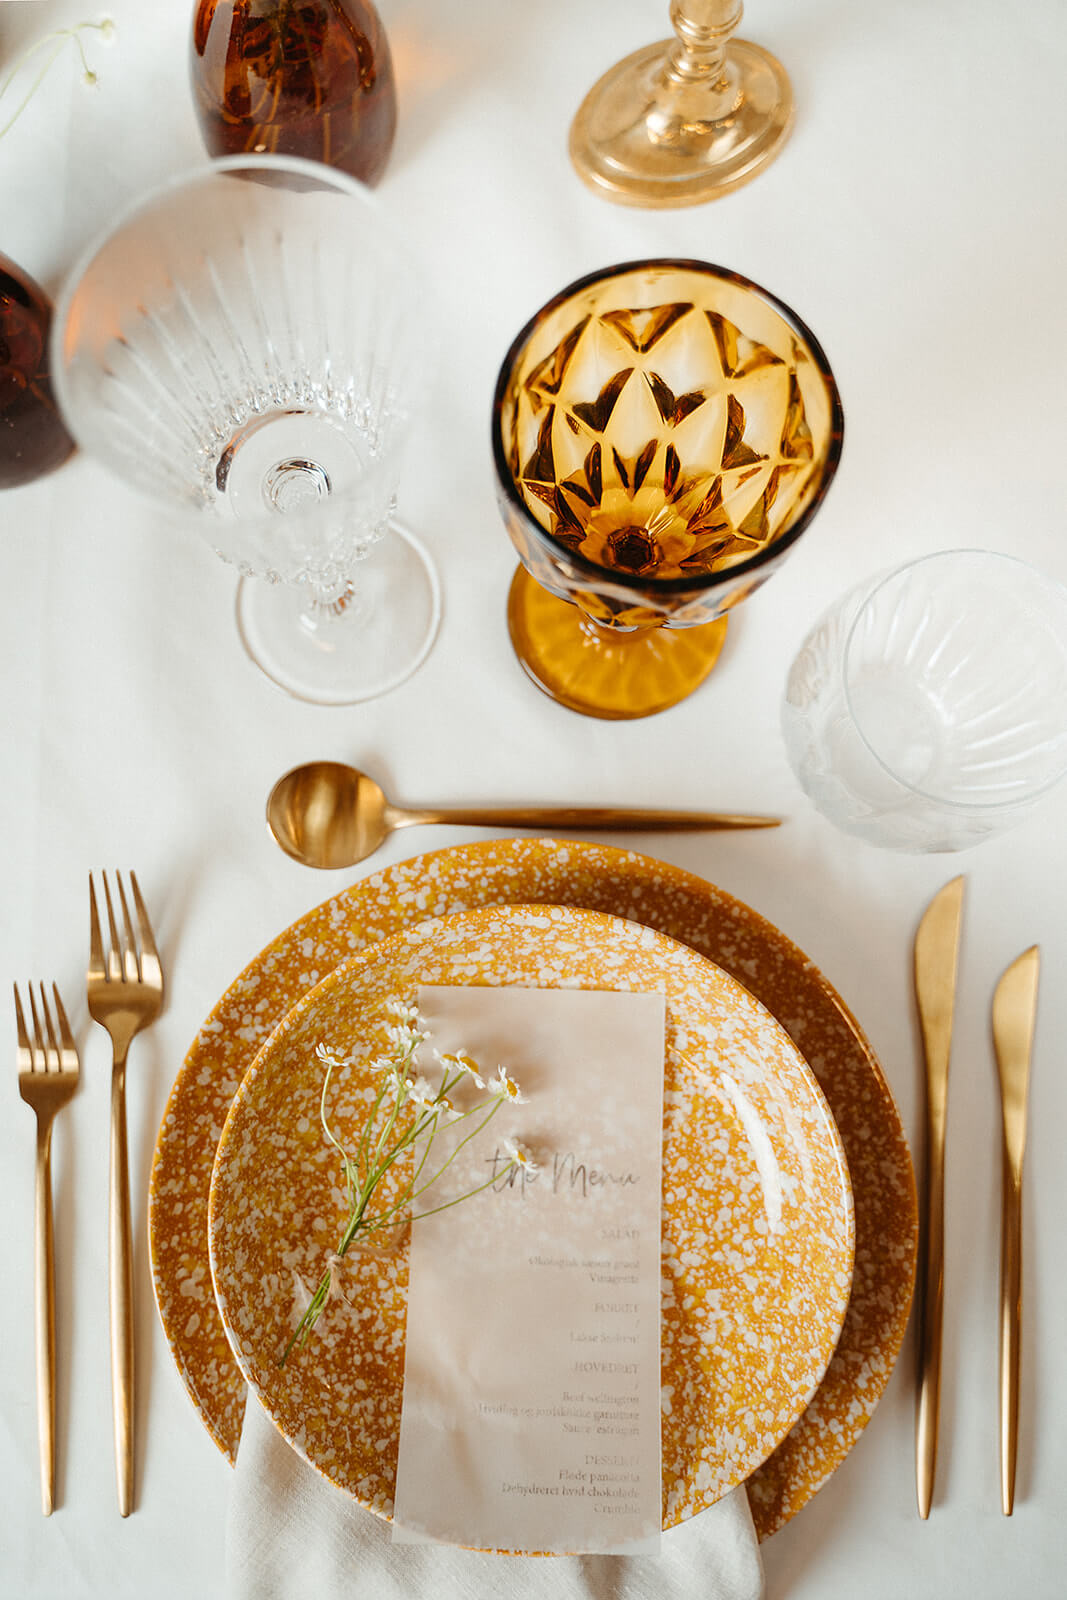 borddækning med Carmel stel og. amberfarvet vinglas og messing bestik